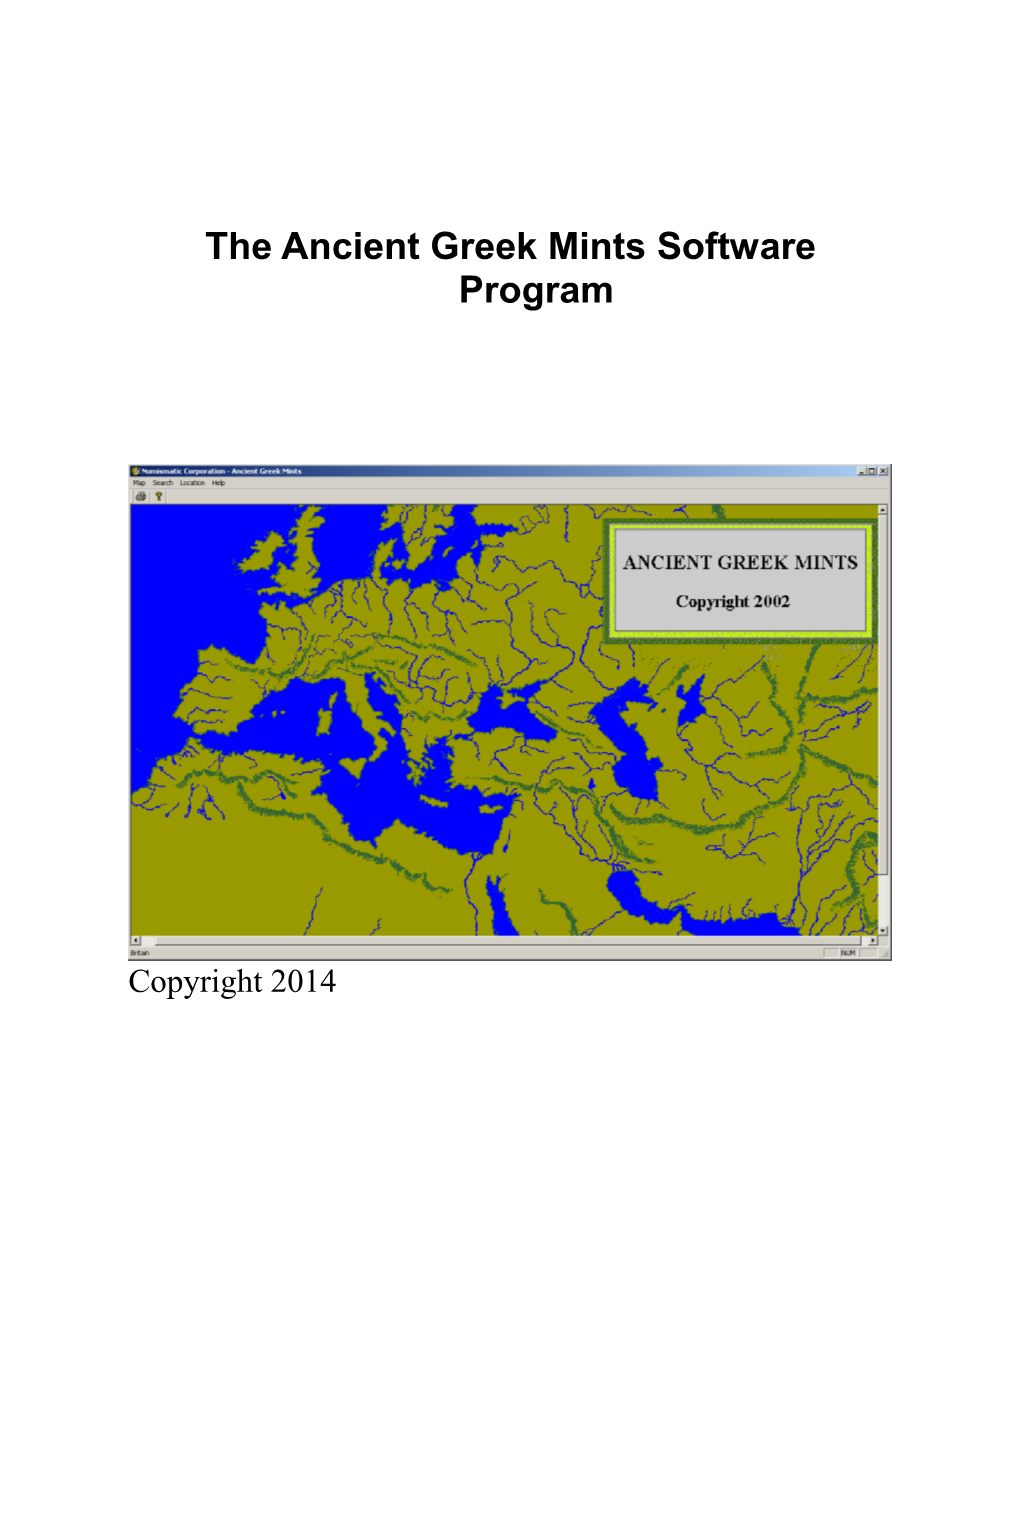 The Ancient Greek Mints Software Program